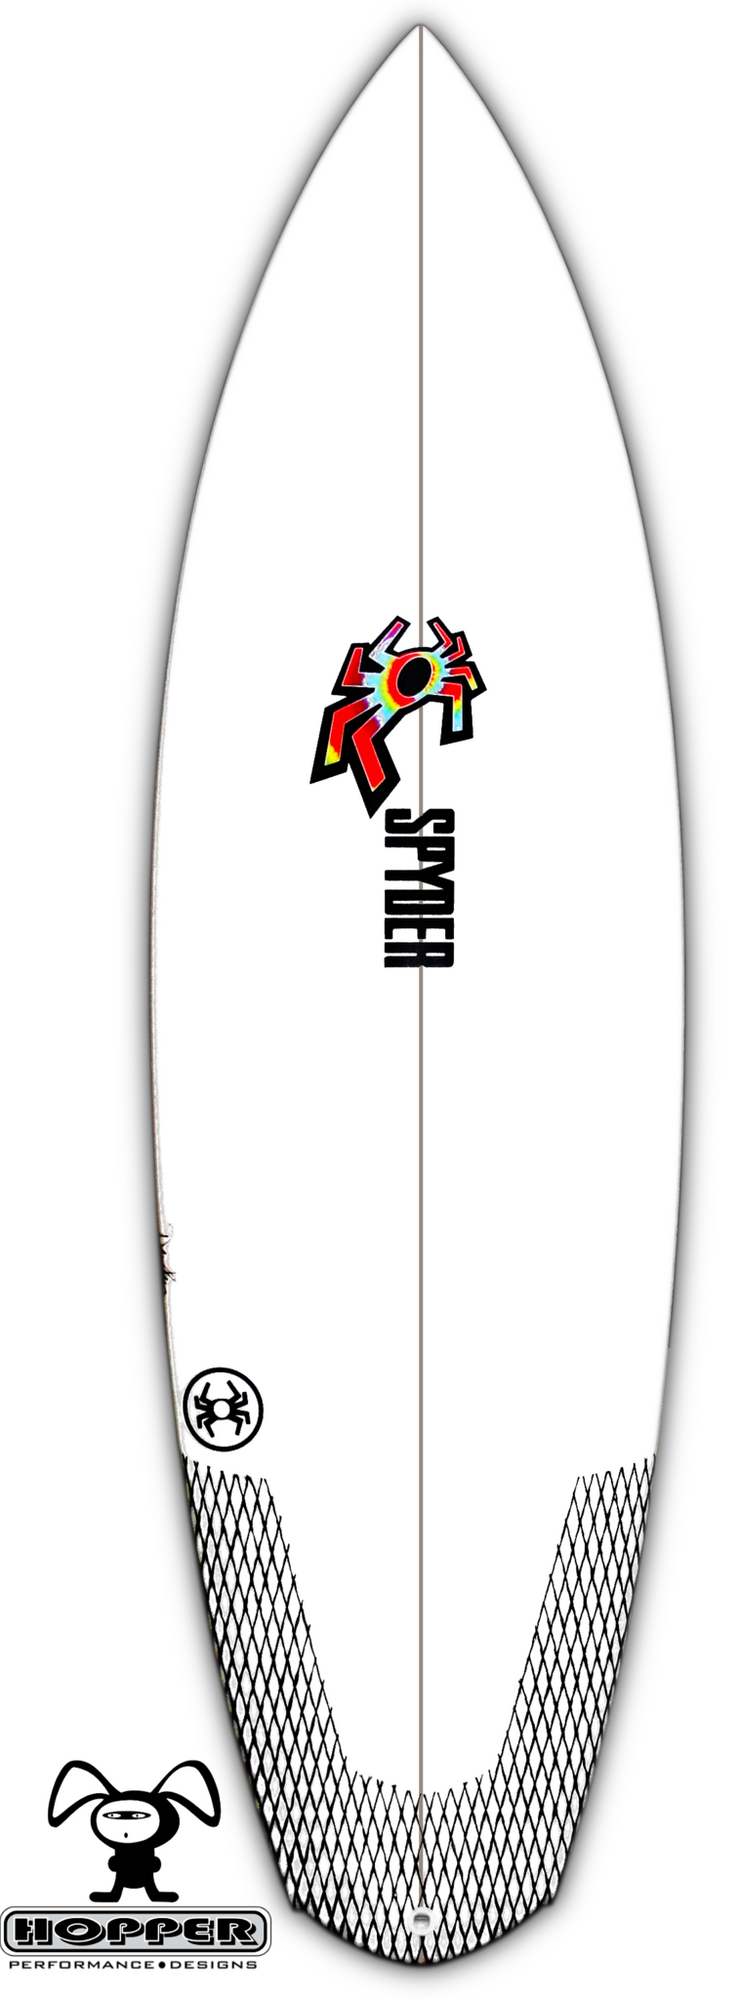 SPYDER SURFBOARDS, HOPPER, [description] - Spyder Surf